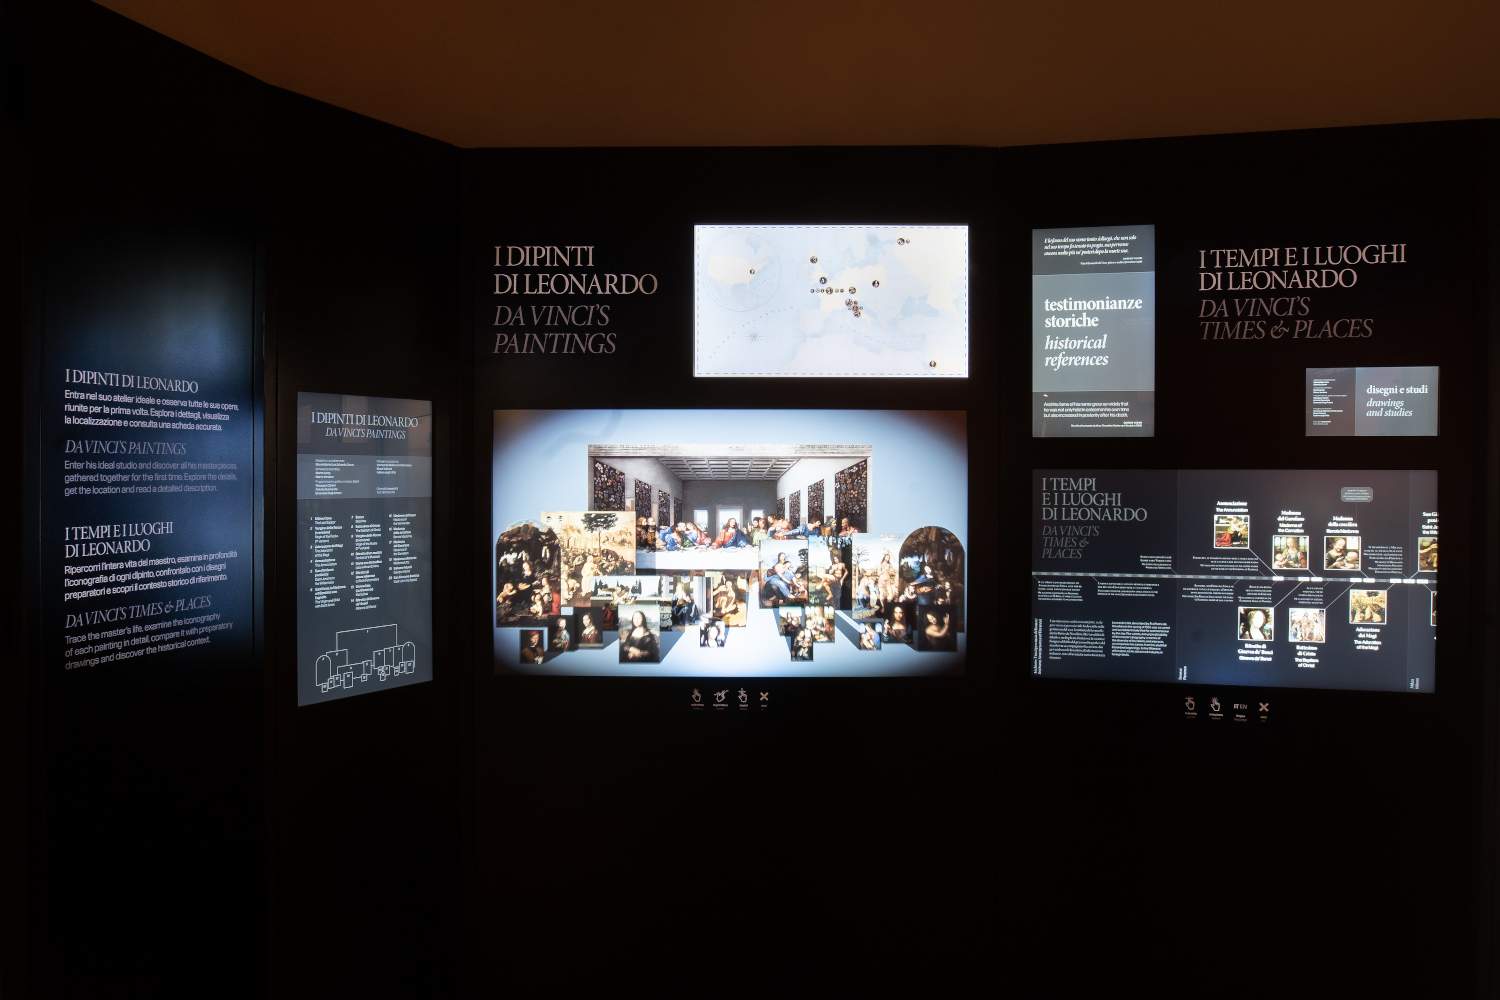 At Leonardo3 museum, a new and unprecedented interactive wall brings together twenty paintings by Leonardo da Vinci 